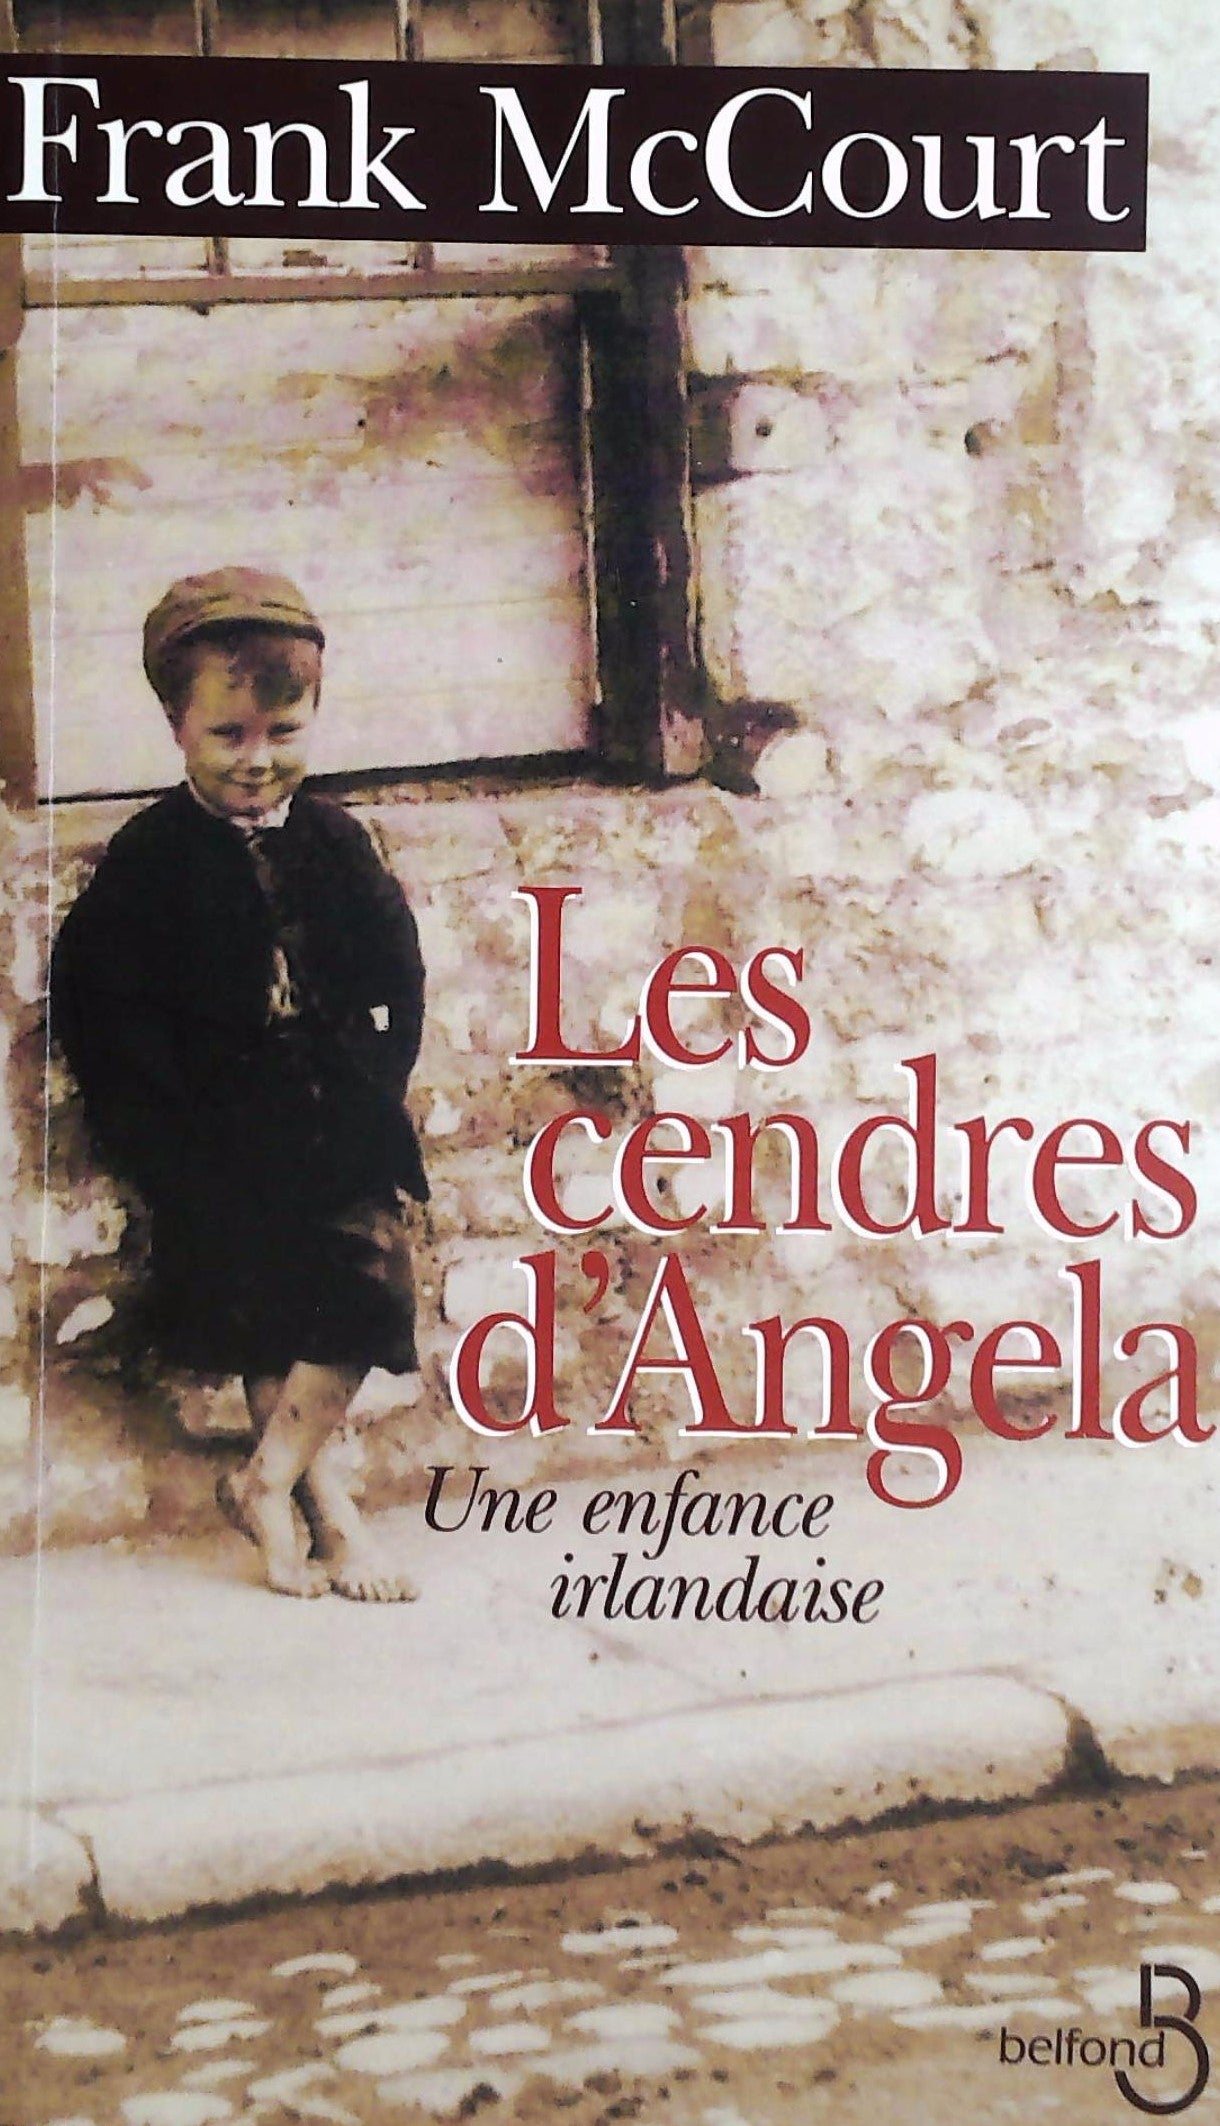 Livre ISBN 2714433235 Les cendres d'Angela : Une enfance irlandaise (Frank McCourt)